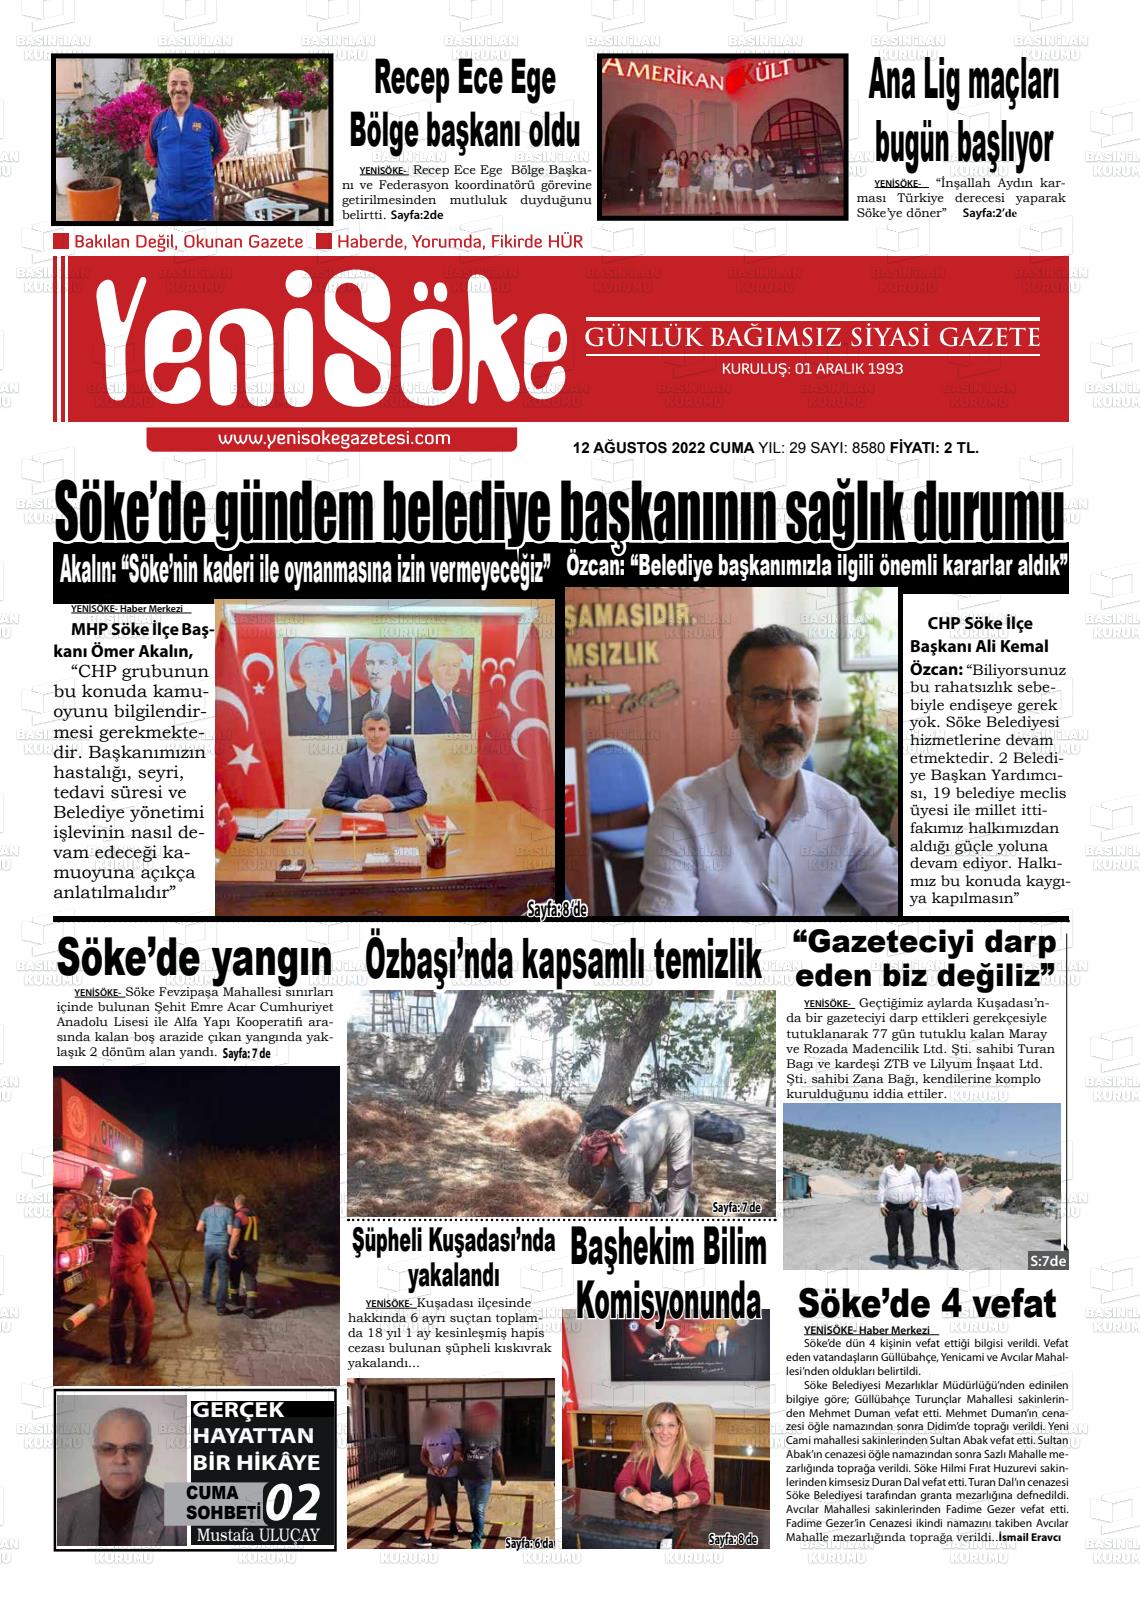 12 Ağustos 2022 Yeni Söke Gazete Manşeti